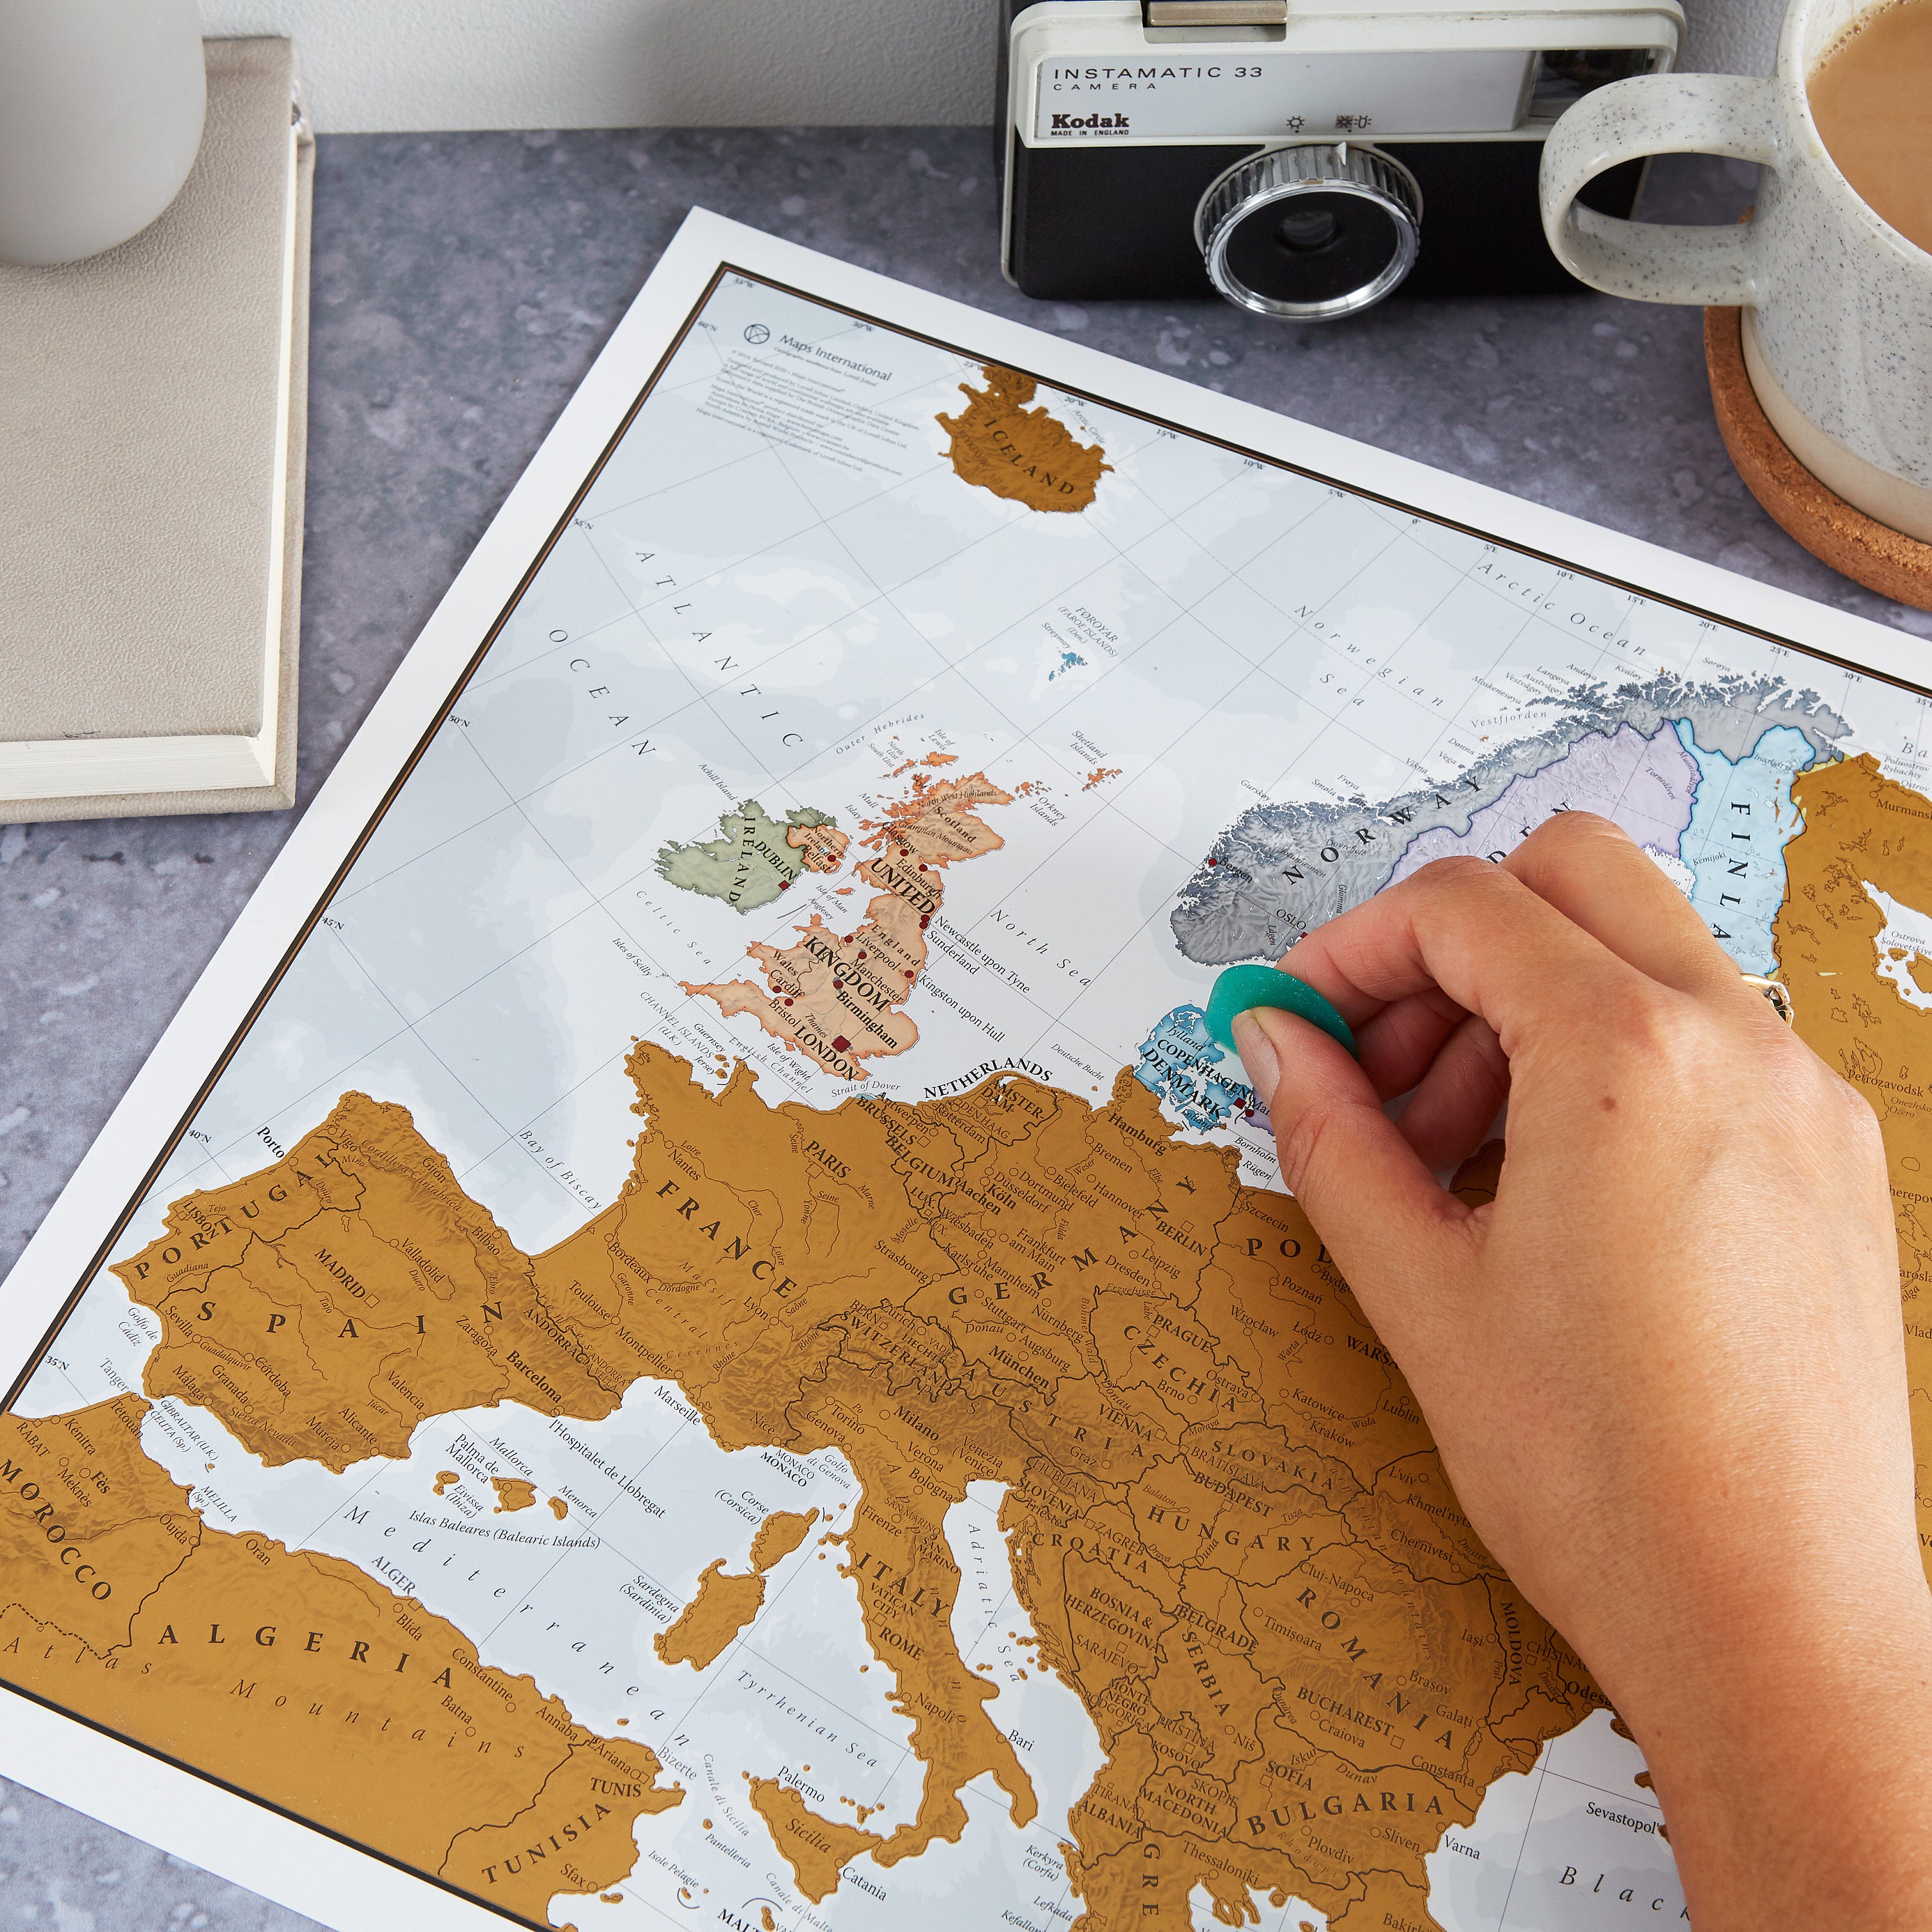 XXL World map Scratch World Map, Scratch Off Travel Map Coffee